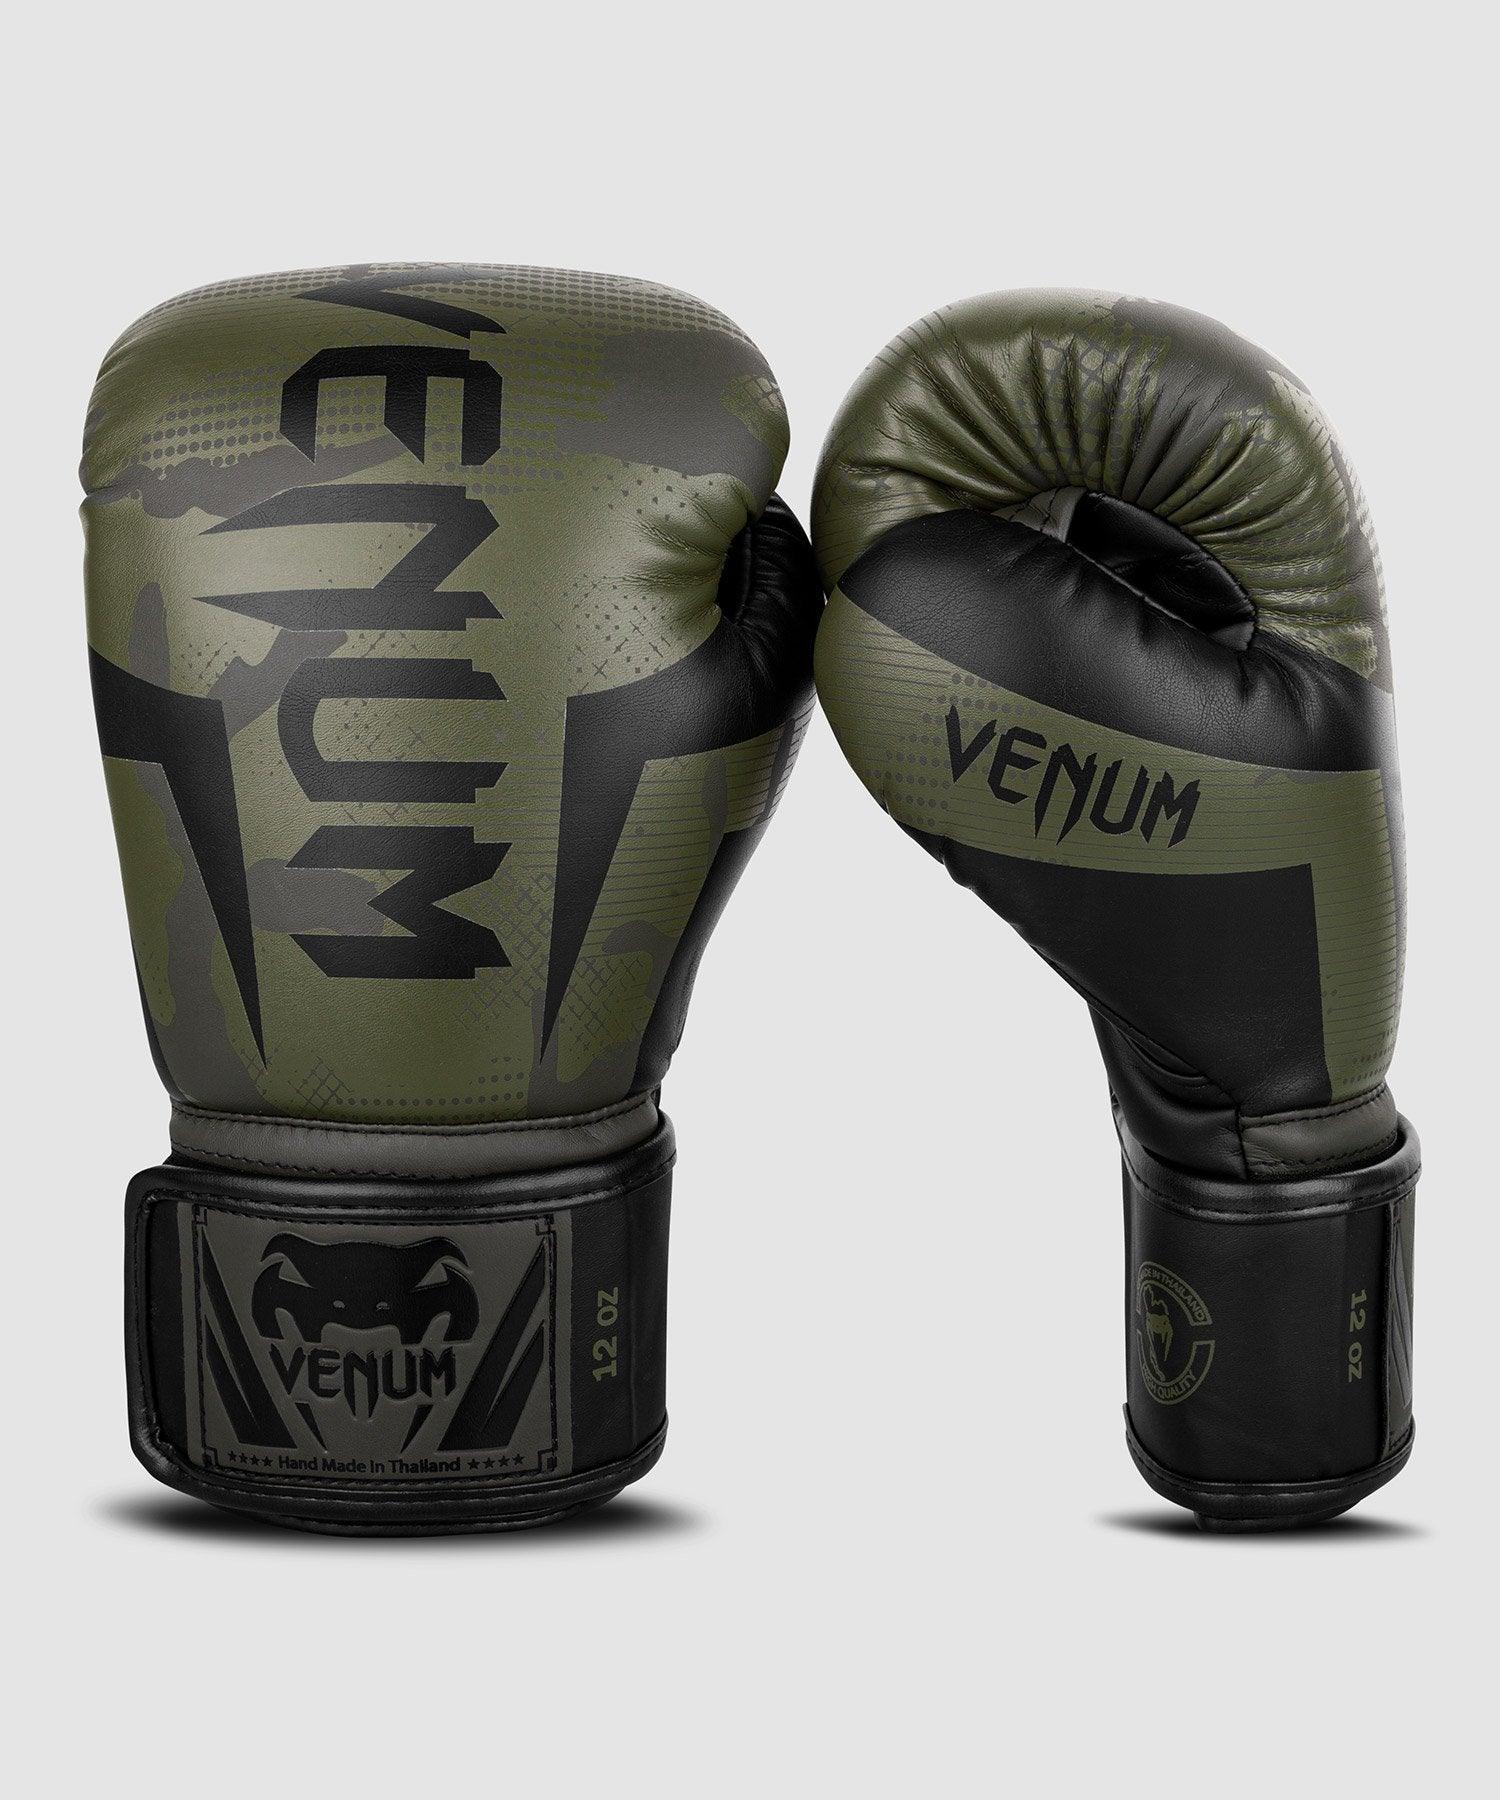 Venum Elite Boxing Gloves - Khaki camo Picture 1